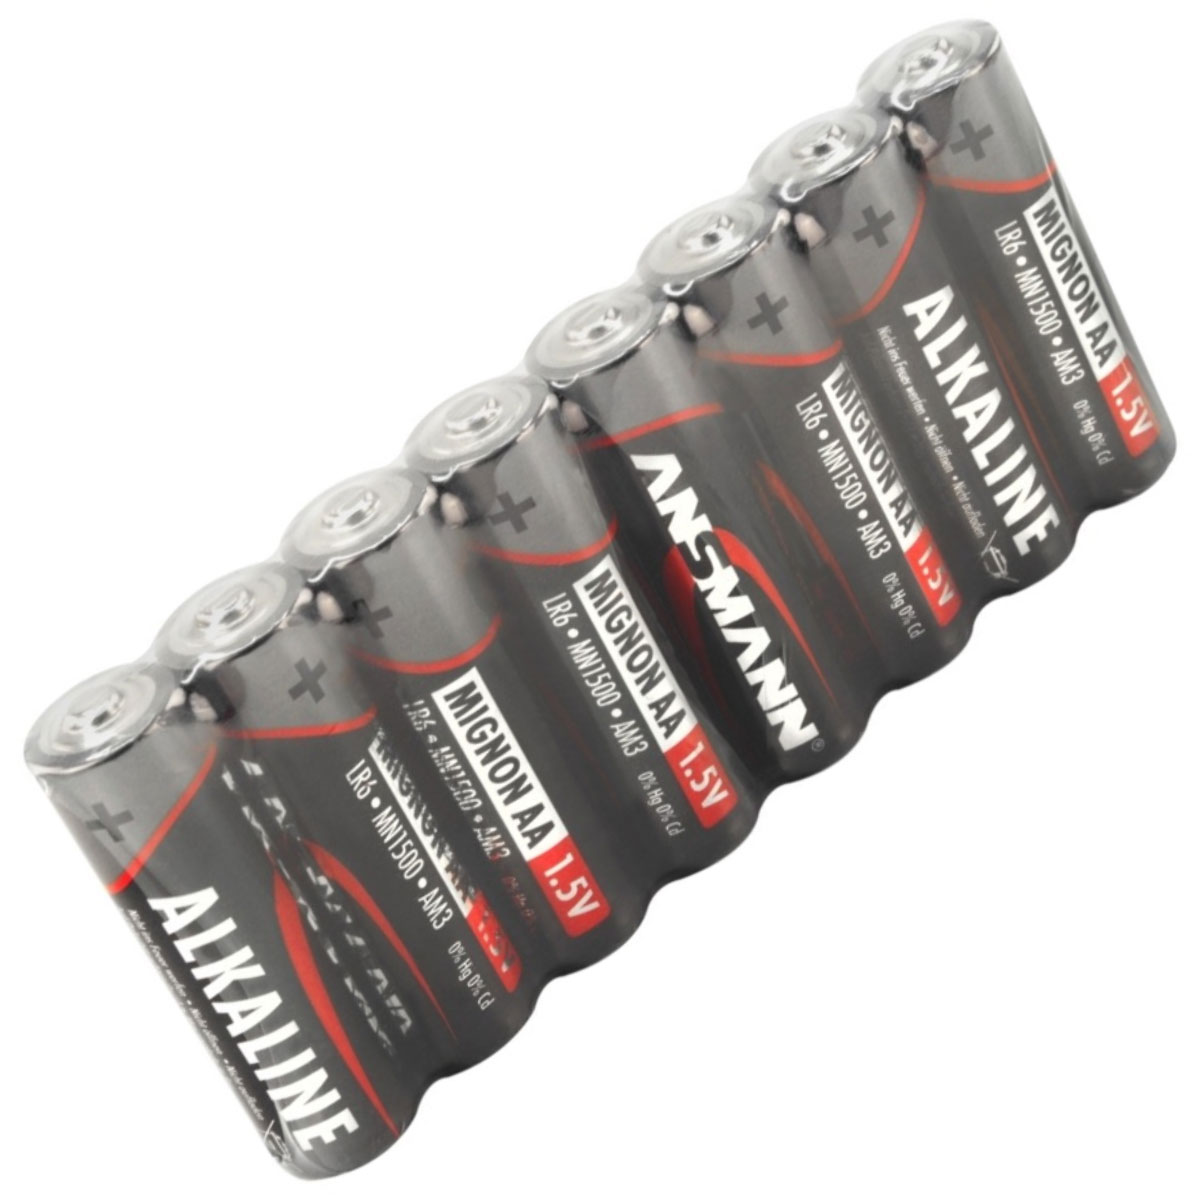 5015280 AA Mignon Batterie LR6 Alkaline 1.5 Volt 8 Stück